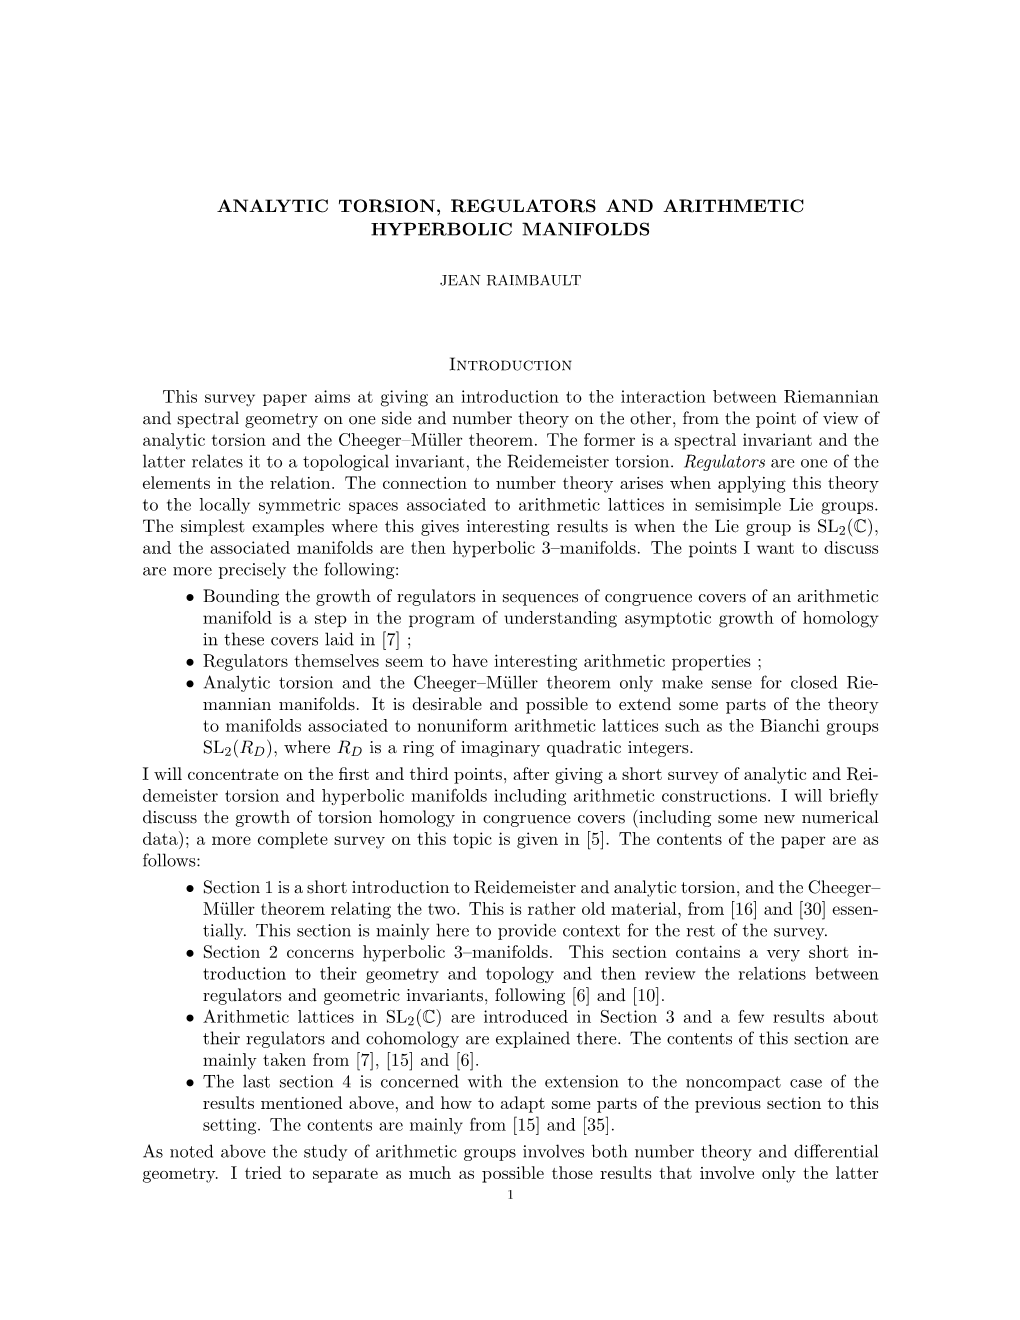 Analytic Torsion, Regulators and Arithmetic Hyperbolic Manifolds